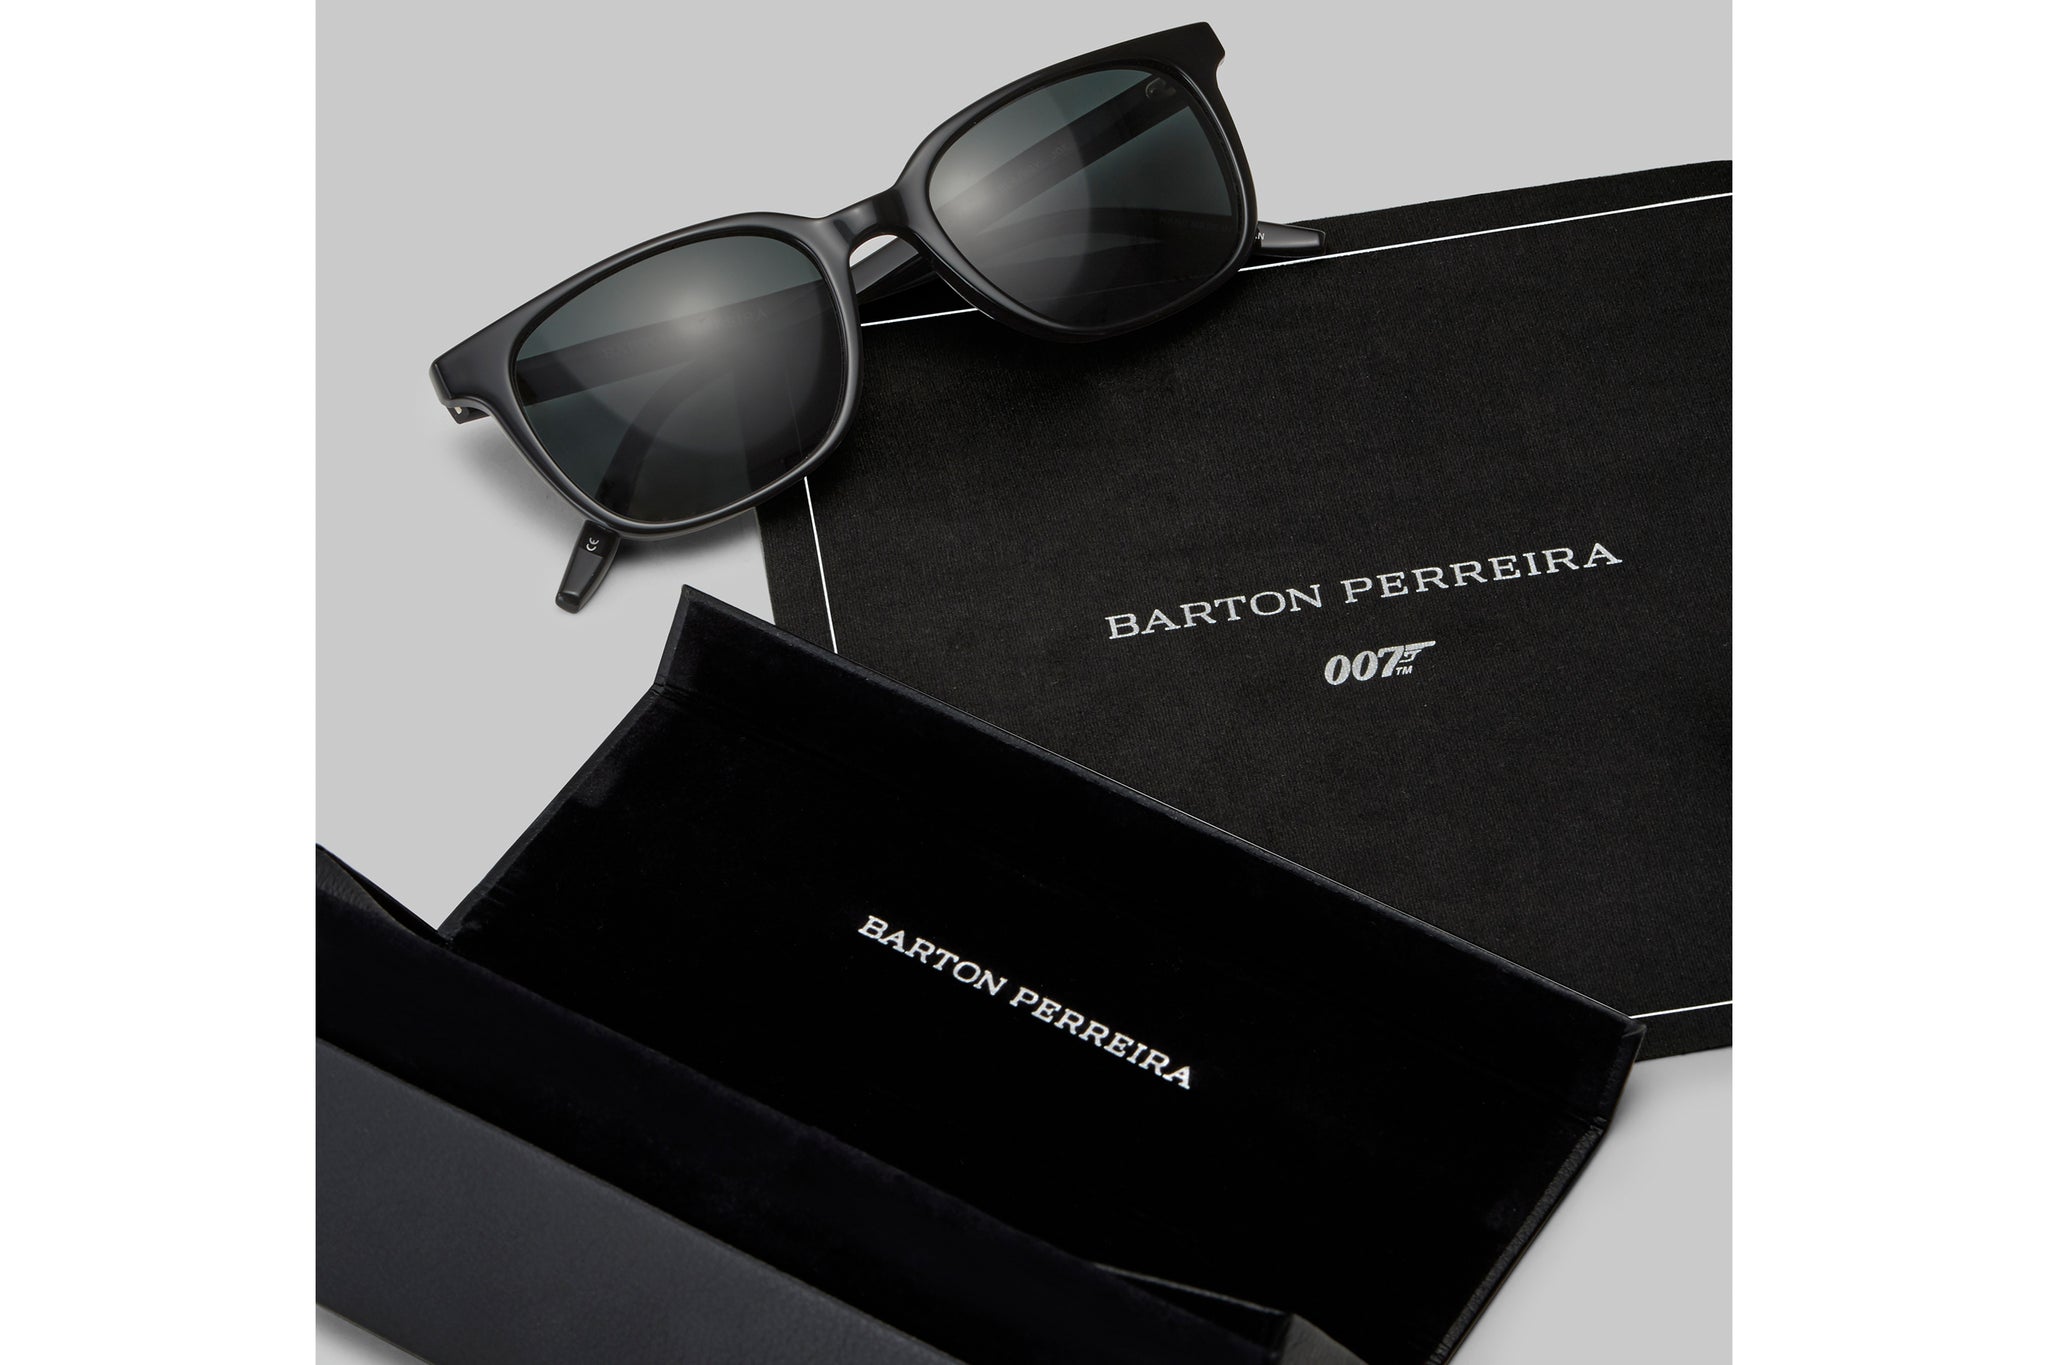 007 joe sunglasses by barton perreira